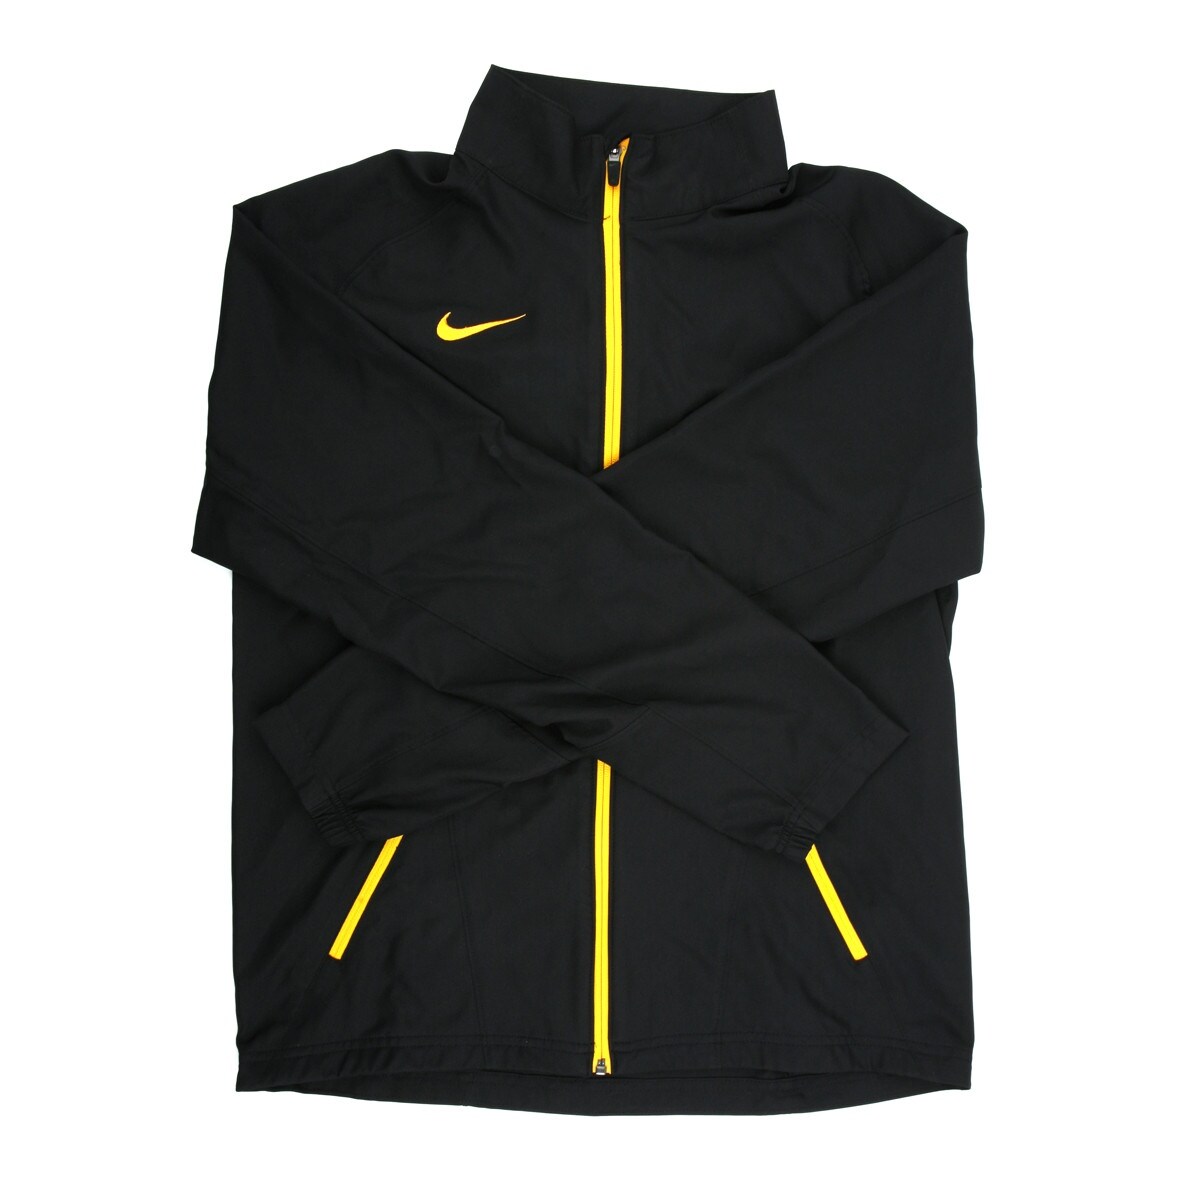 nike jacket black and yellow